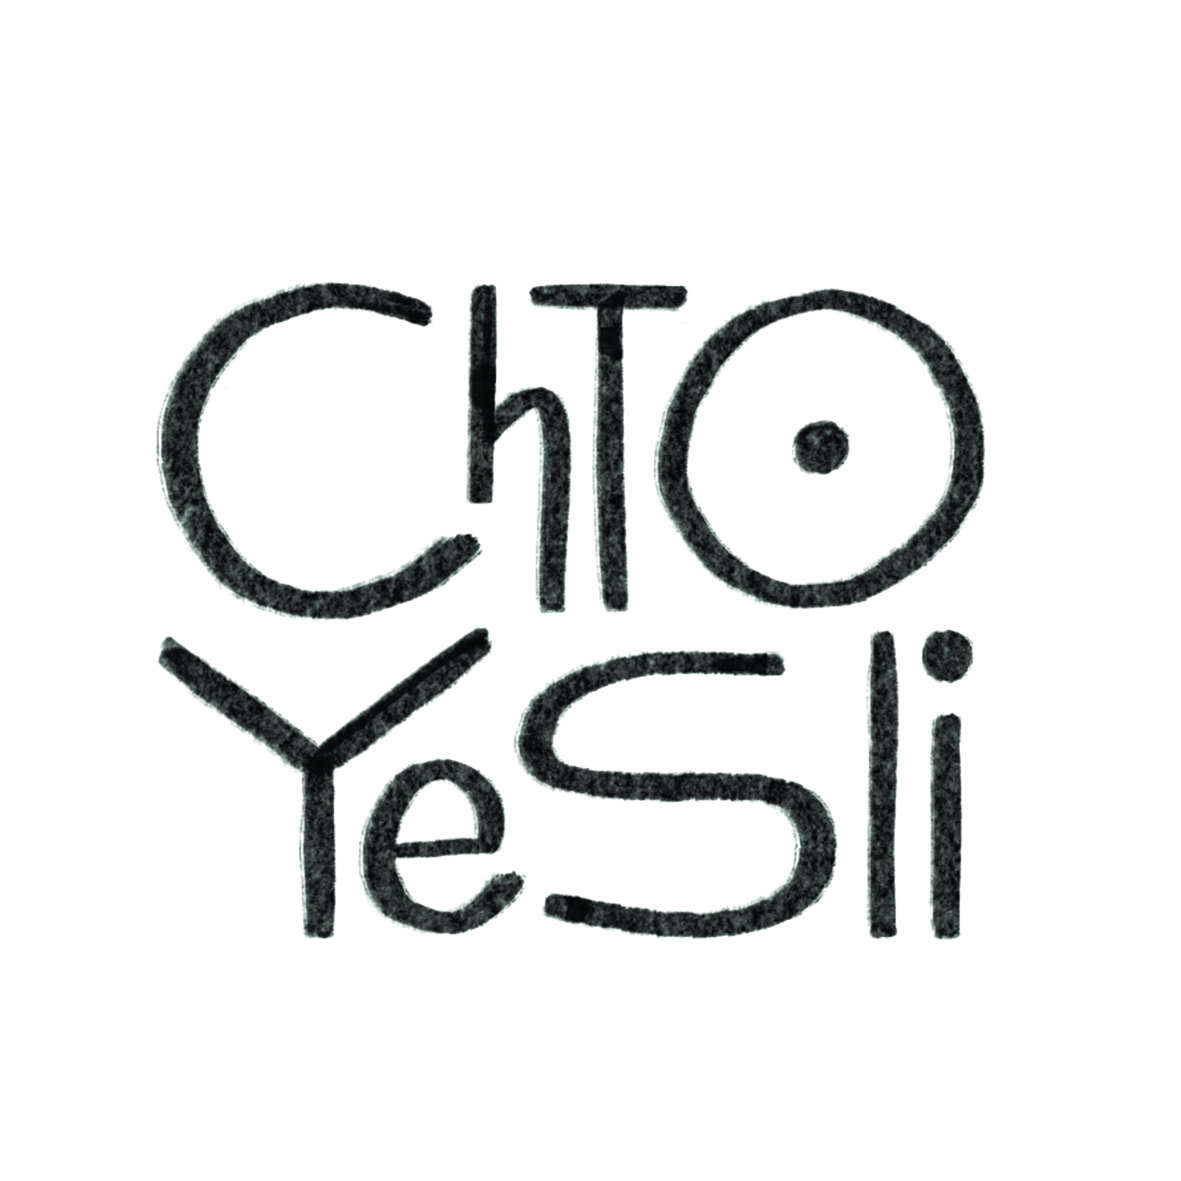 Creative group Chto Yesli